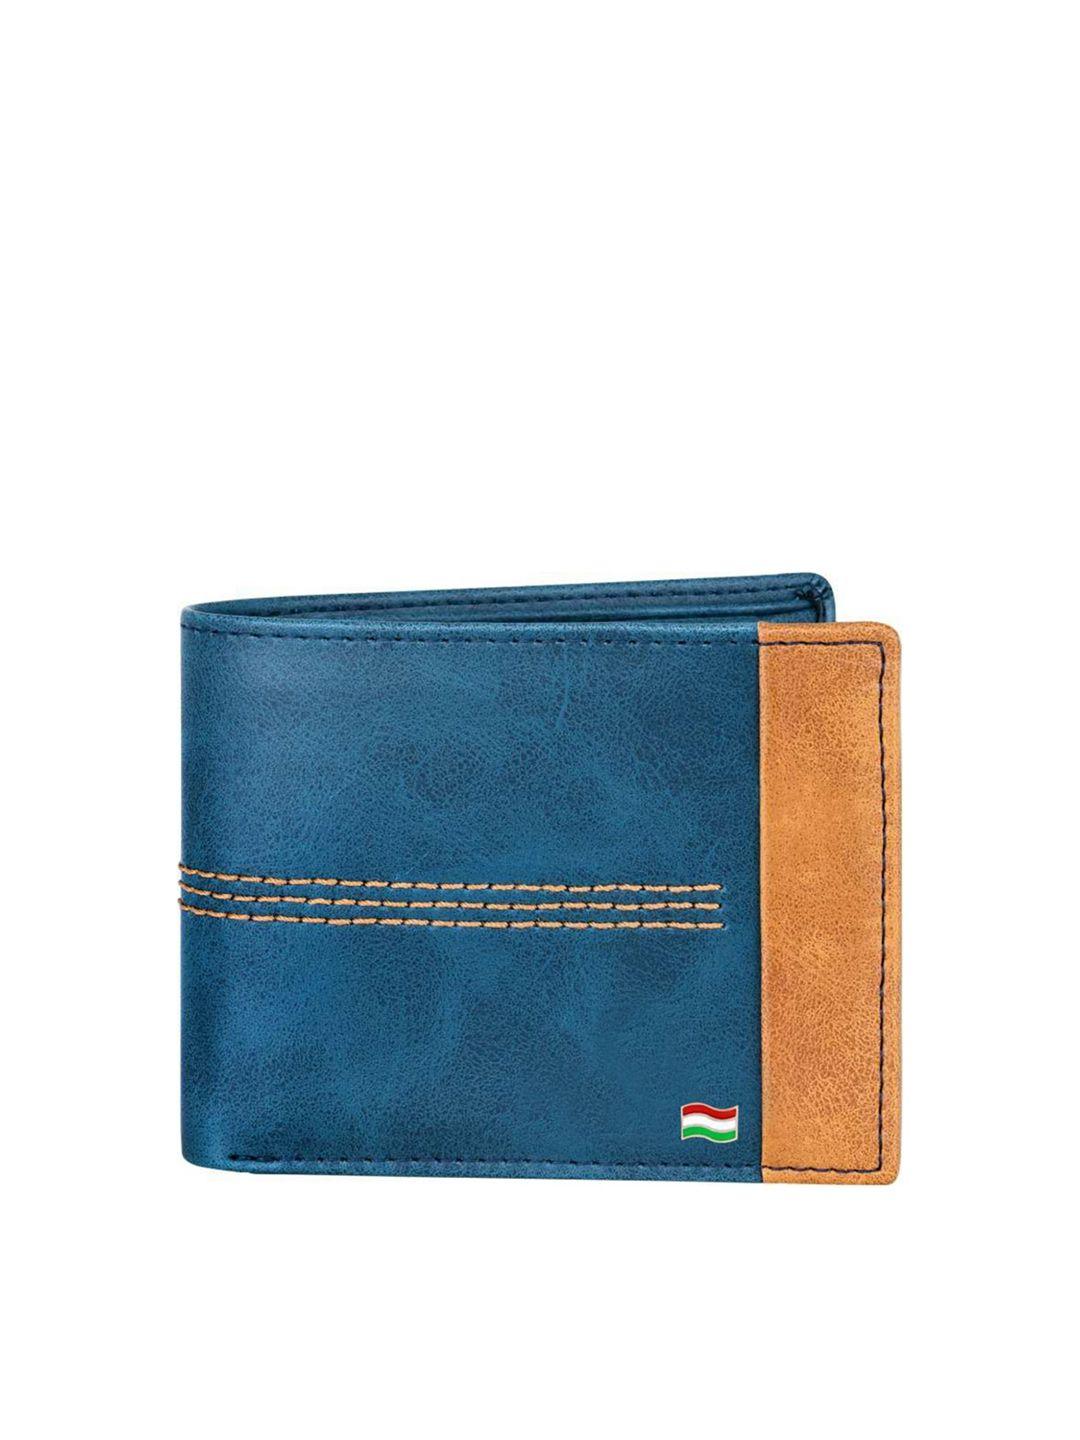 hamt men blue & brown leather two fold wallet